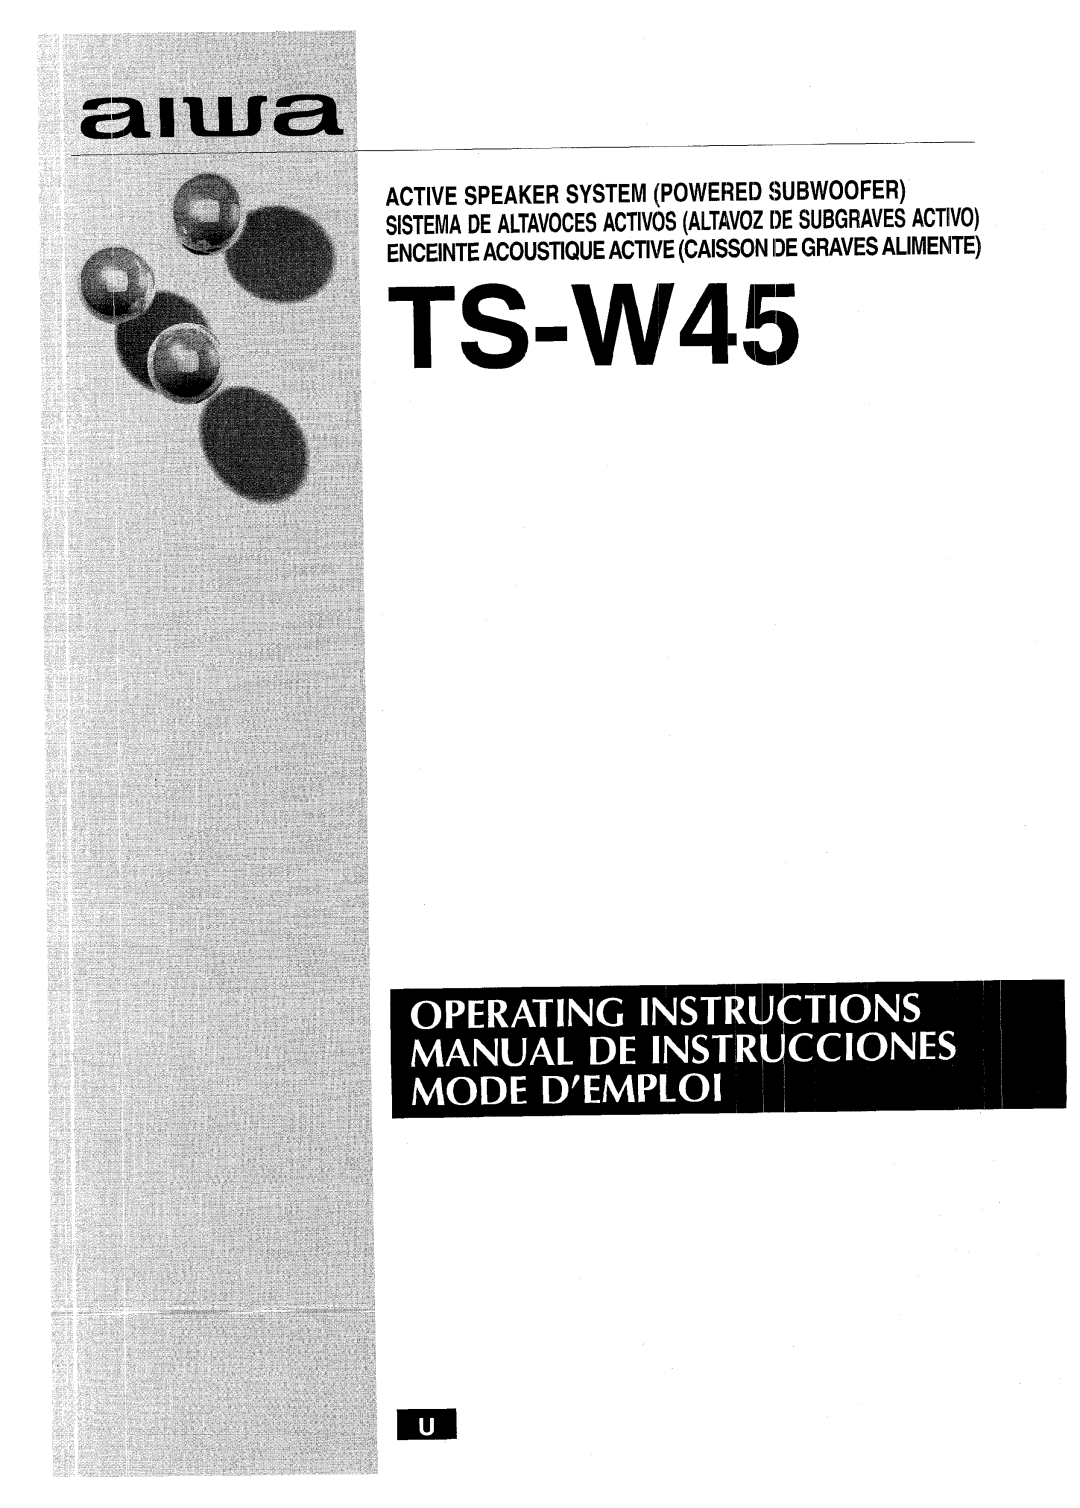 Aiwa TS-W45 manual ACTIVE SPEAKER SYSTEM POWEREII SU13WOOFER, Enceinteacoustique Active Caisson Idegraves Alimente, TS=W45 